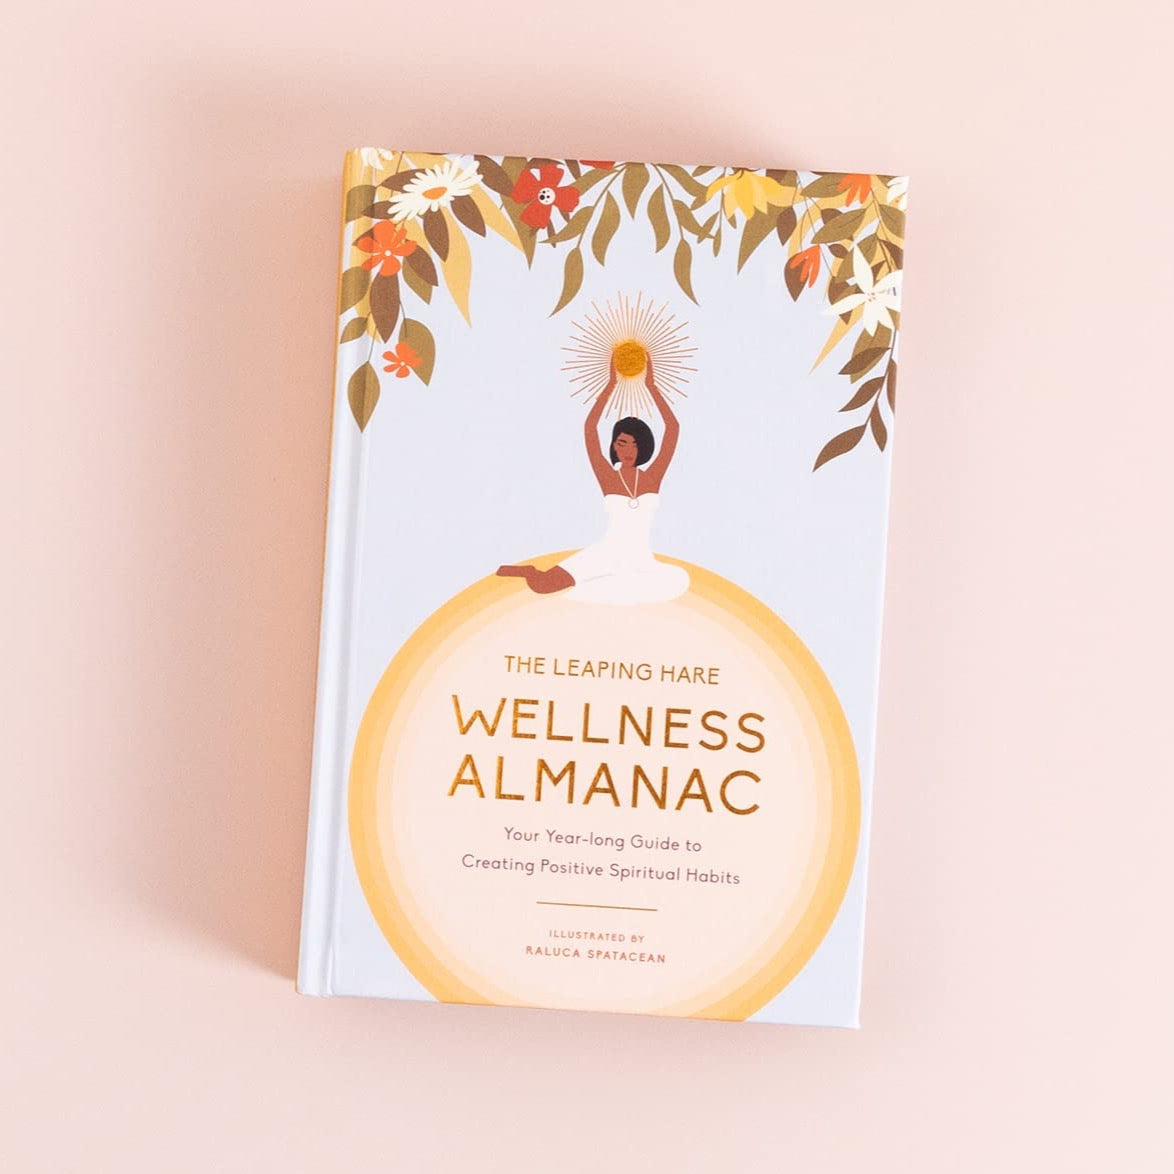 The Wellness Almanac Book